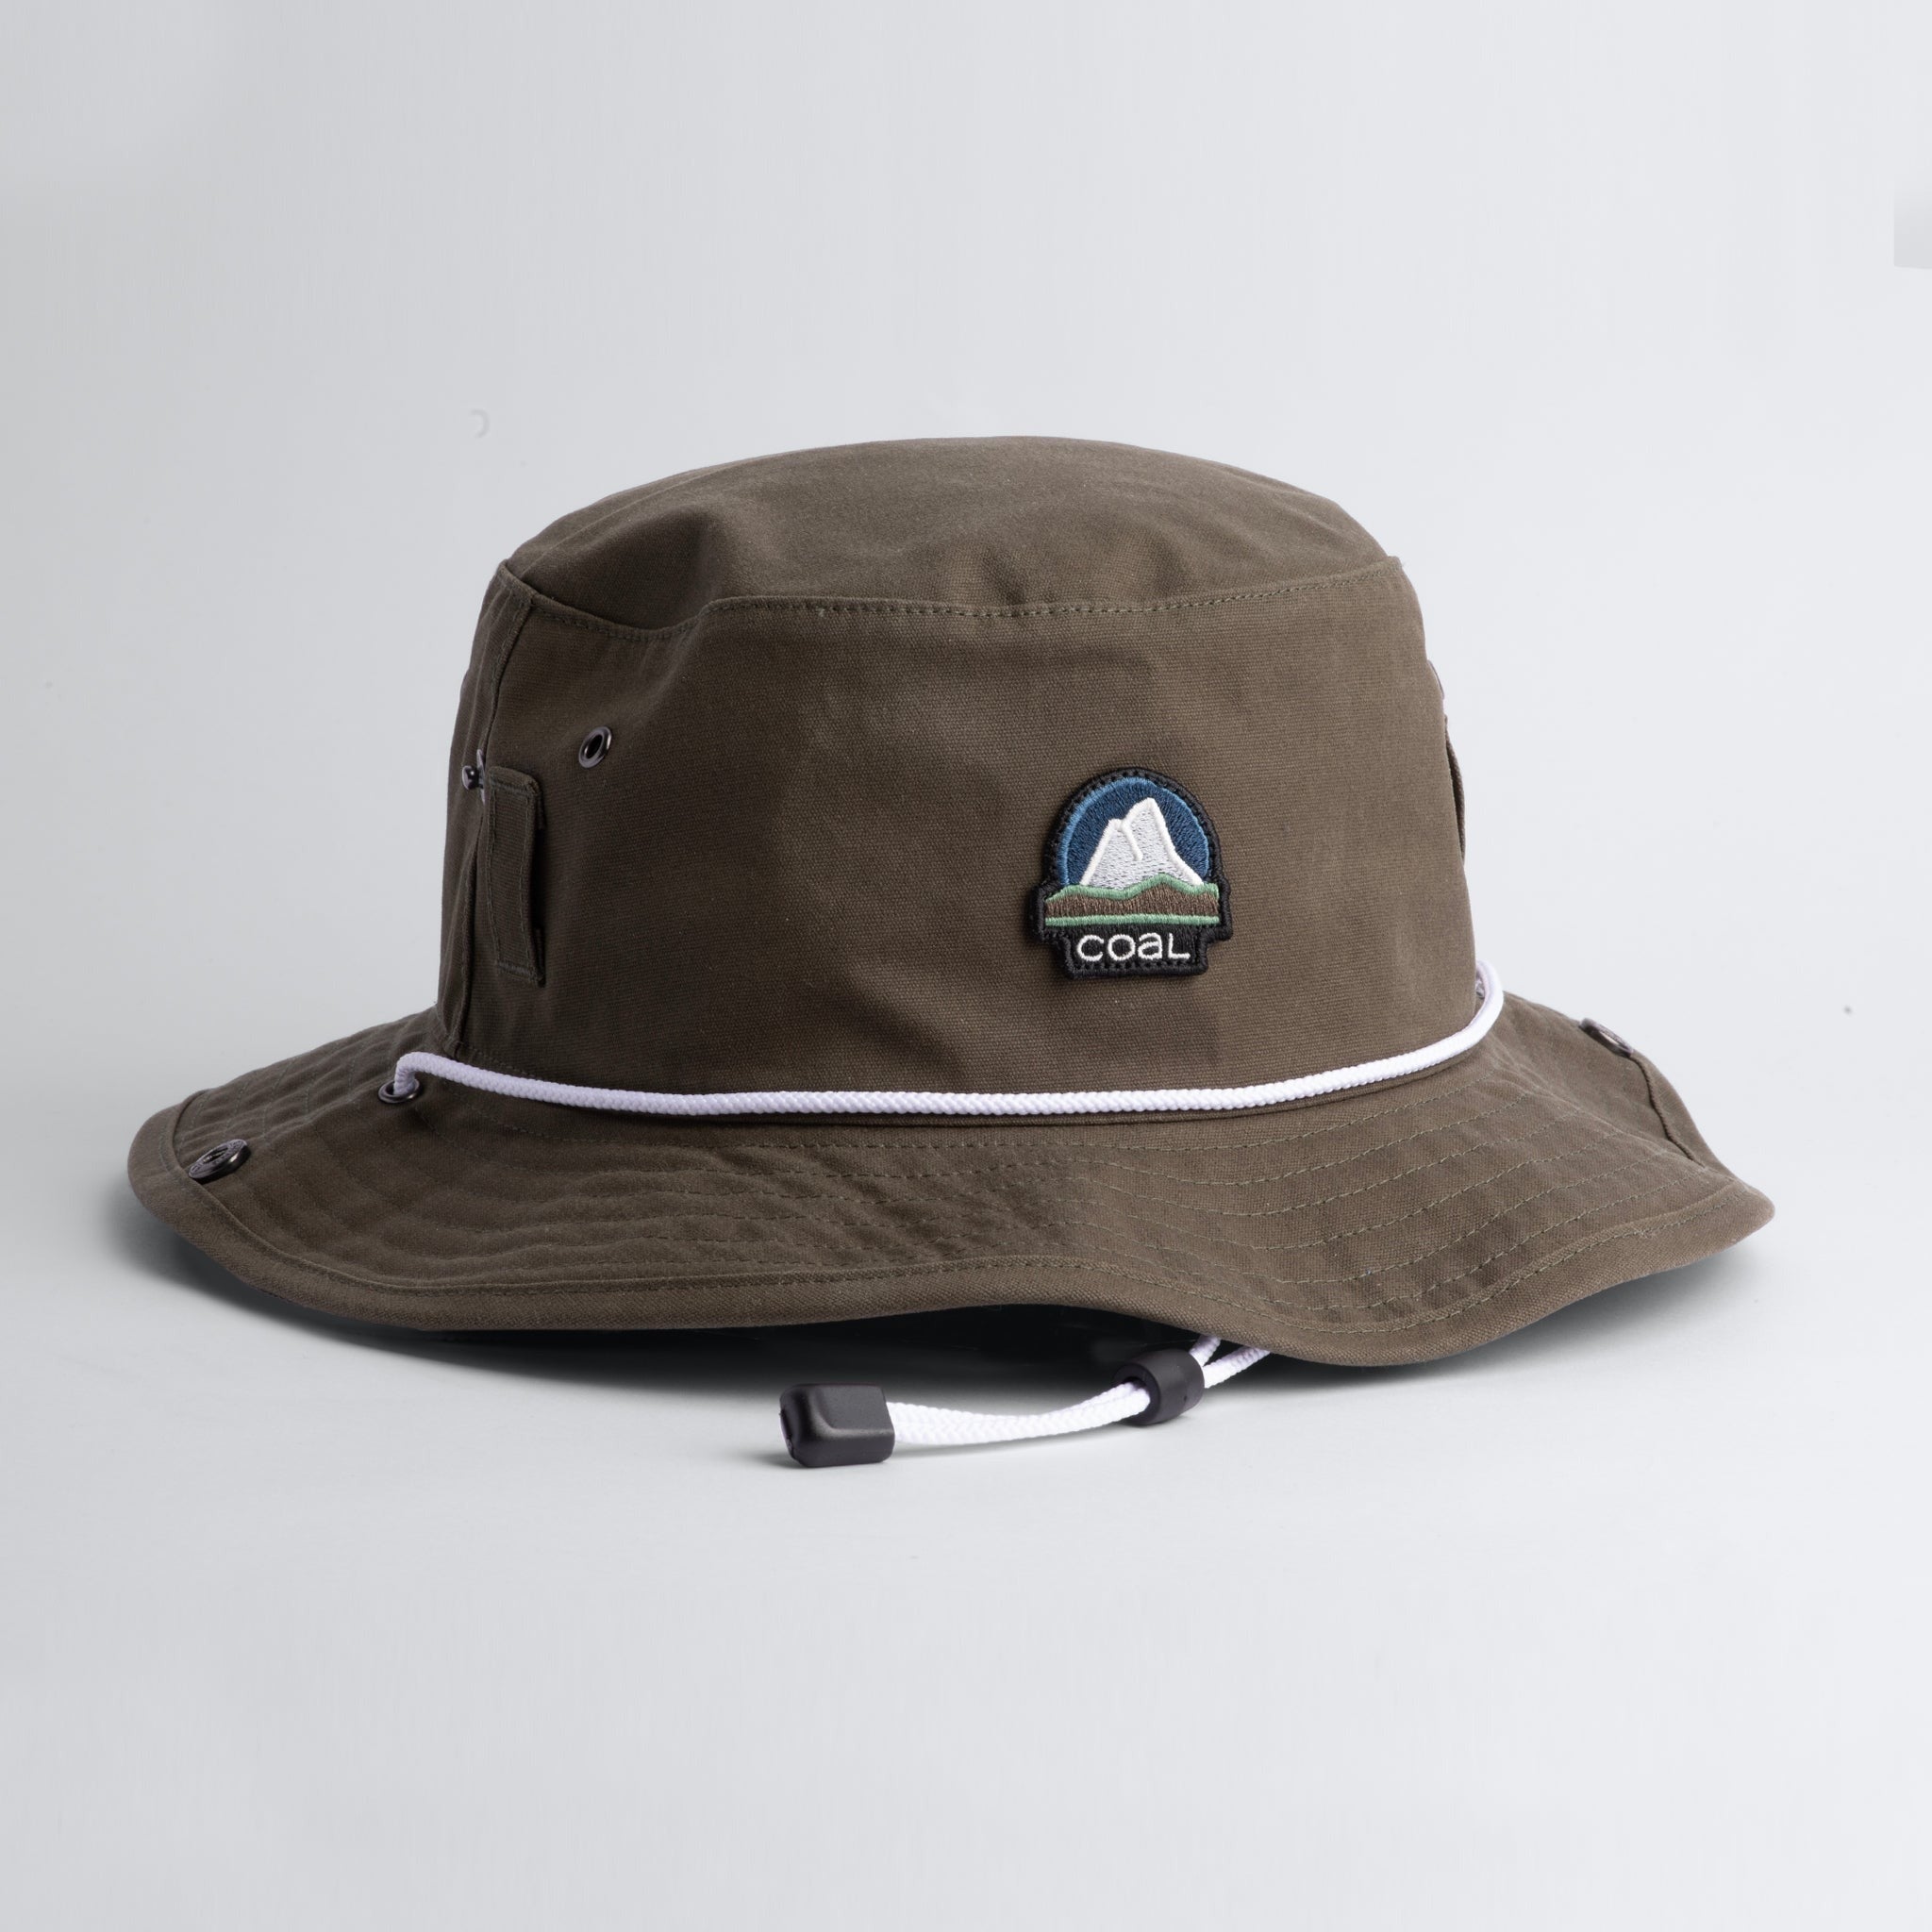 Seymour Bucket Hat, Accessories, Hats